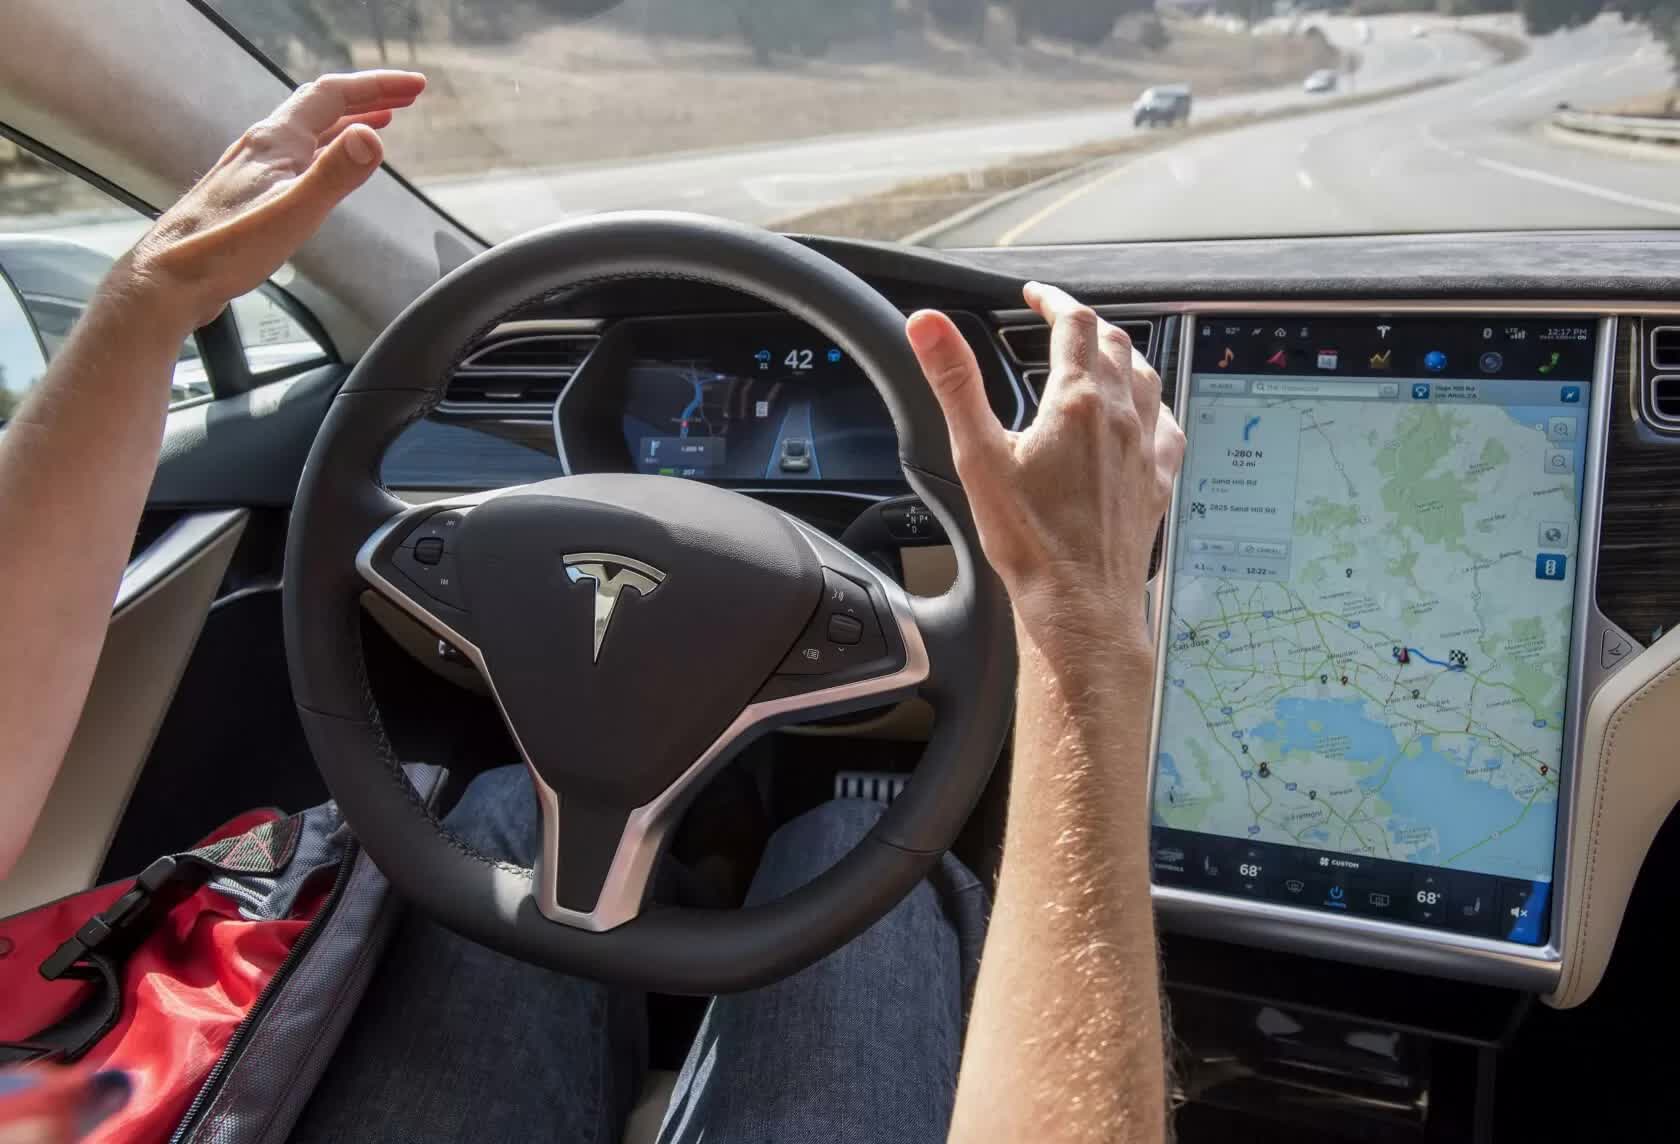 Tesla recalls 135,000 vehicles over touchscreen display crash risk